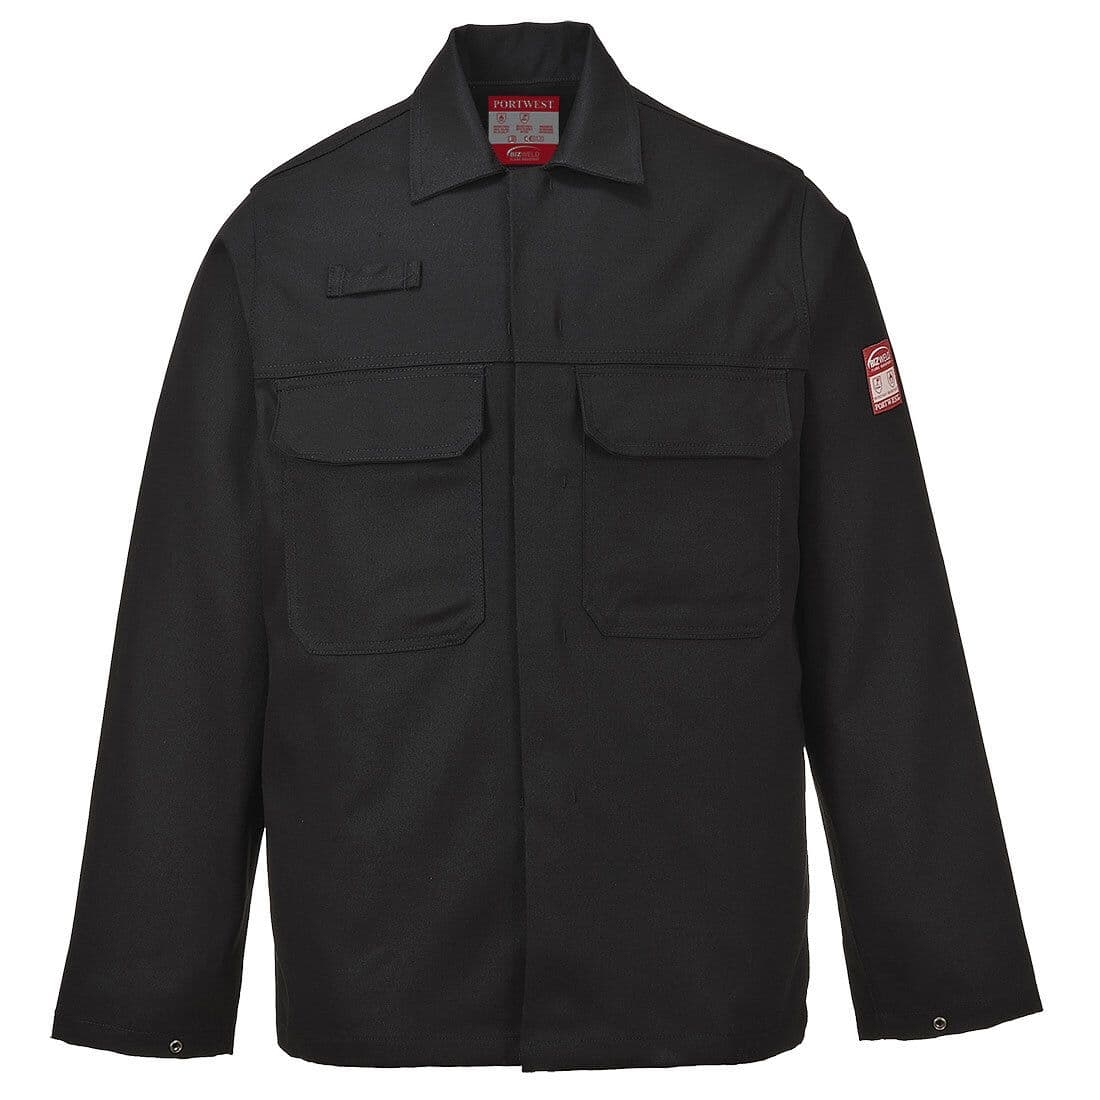 Portwest Bizweld Jacket – Black – XXXL – Flame Resistant/Protection – PPE – Taft Safety Store